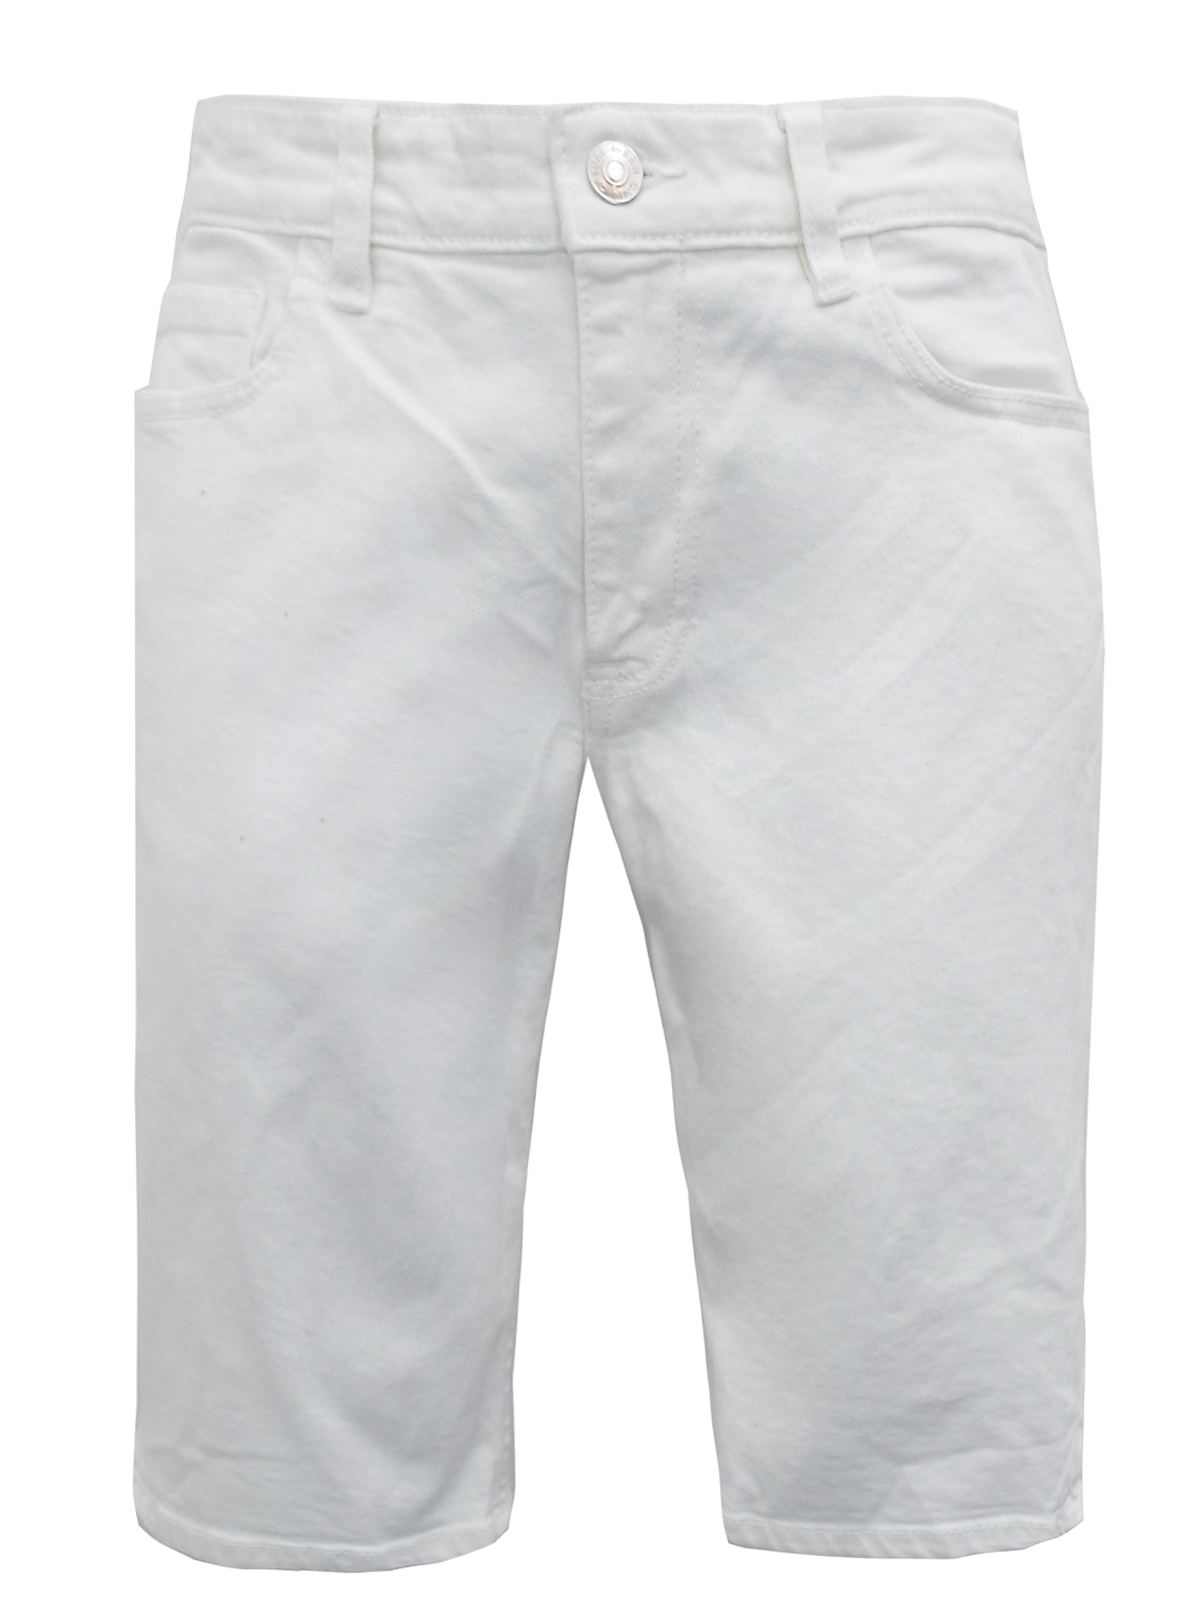 M4ngo WHITE Cotton Rich 5-Pocket Denim Shorts - Waist Size 30 to 36